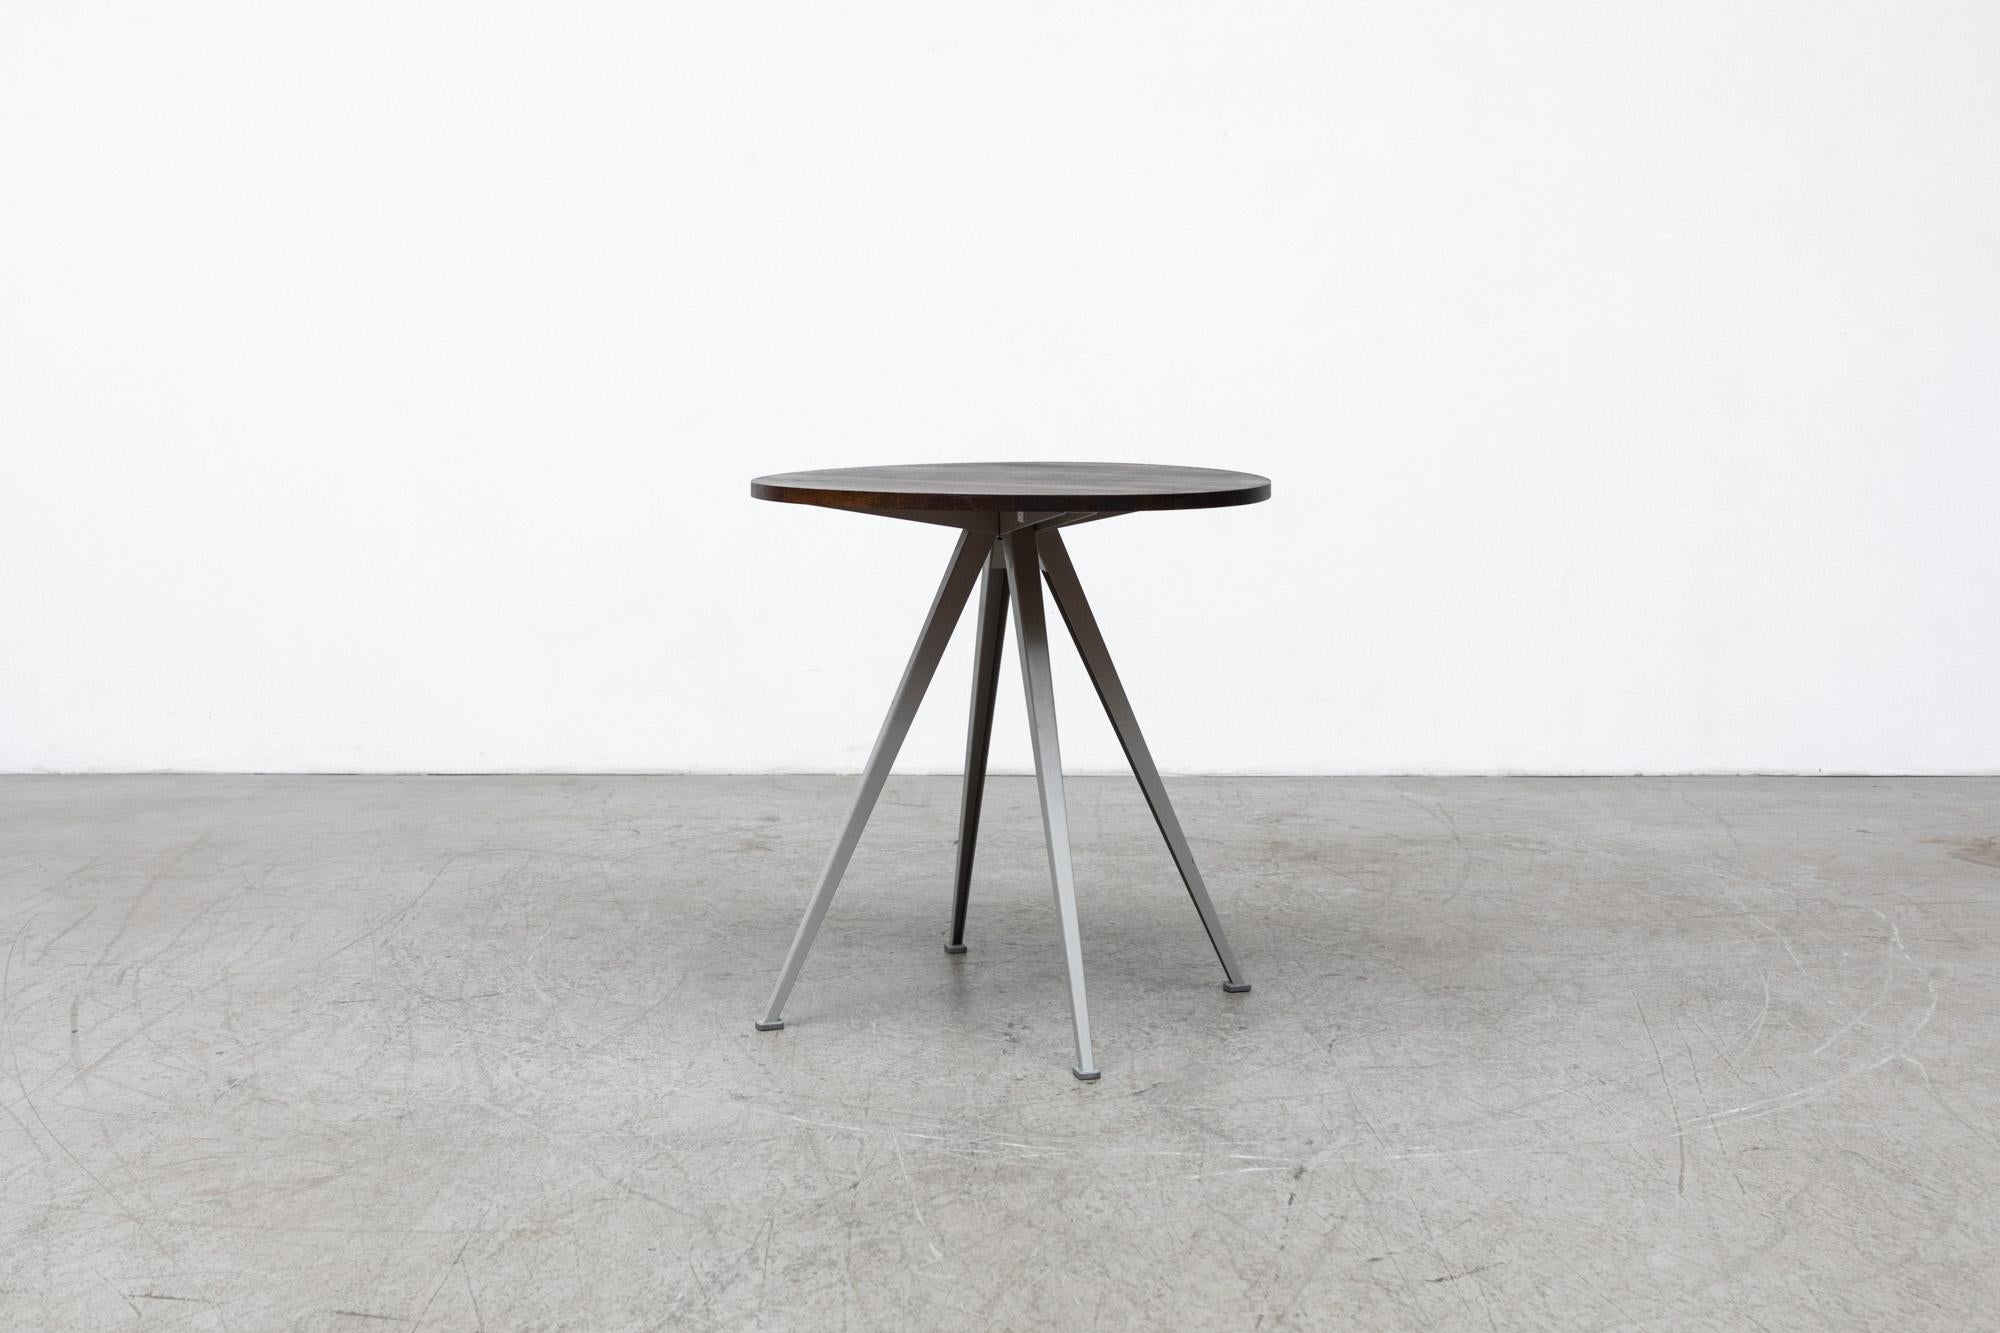 Danish Wim Rietveld Small Round Pyramid Table in Smoked Oak w/ Gray Legs by Hay